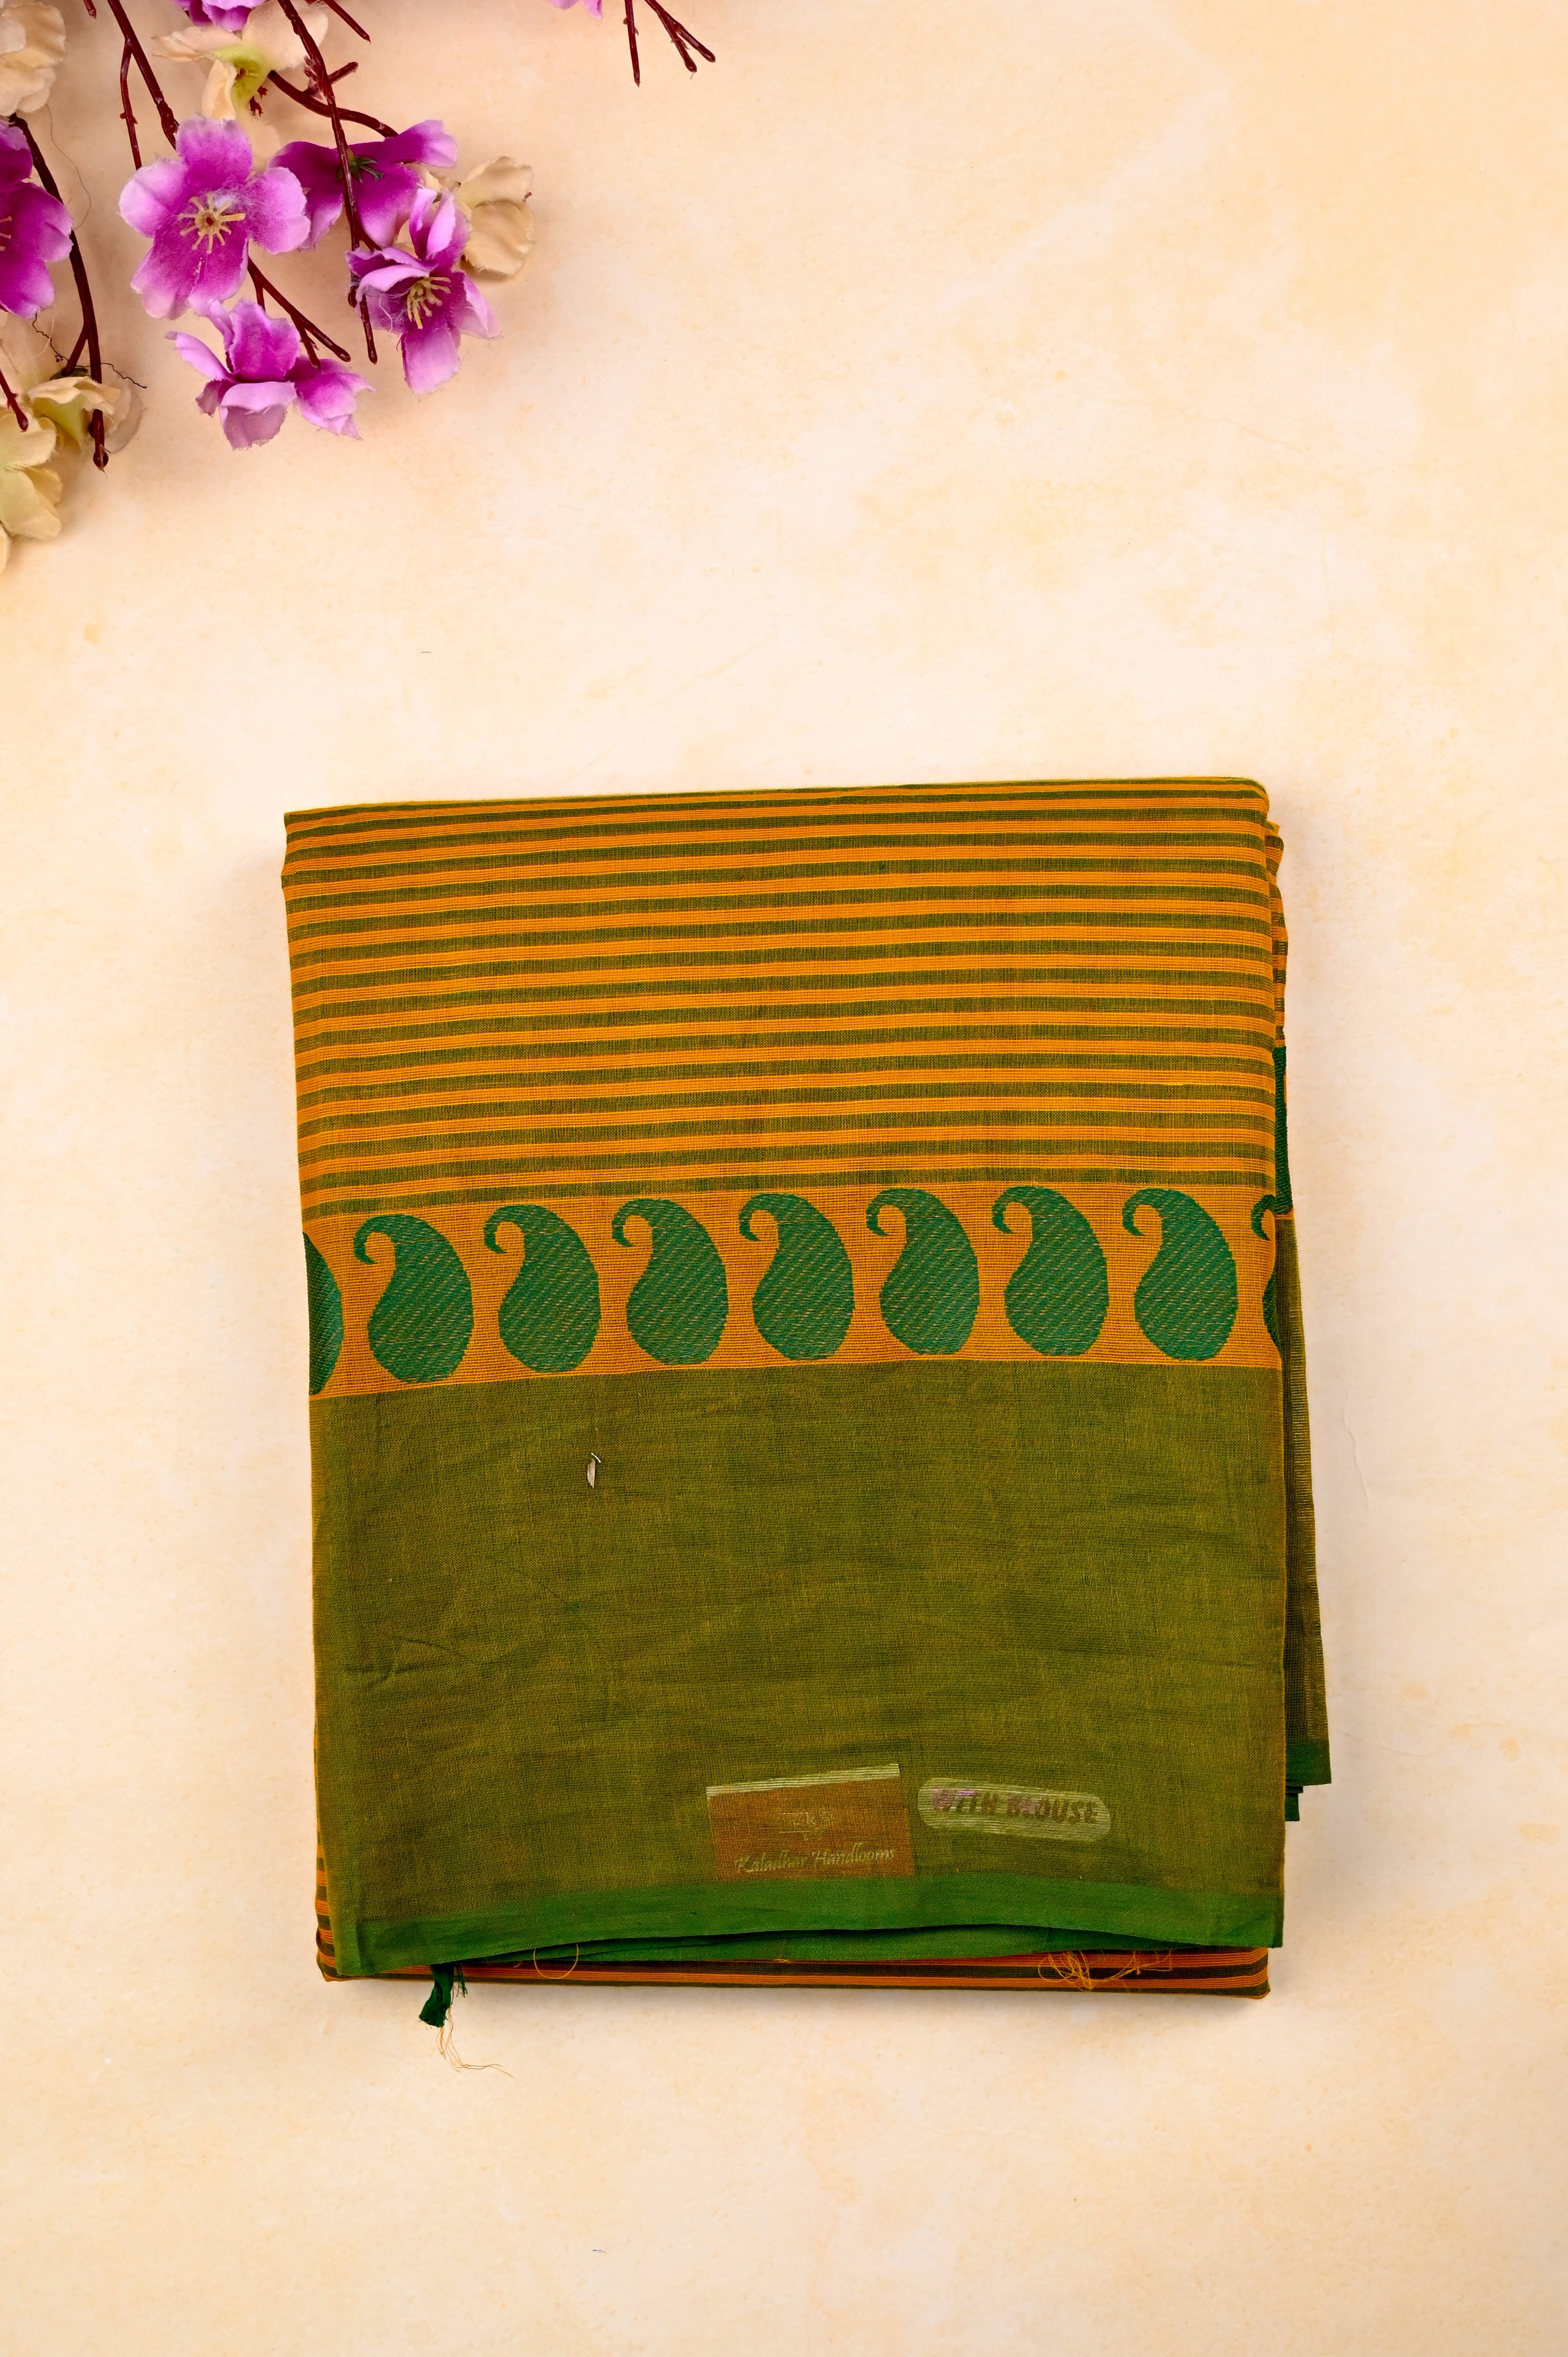 Kanchi cotton saree yellow color with allover lines, big kaddi border, short pallu and running blouse.